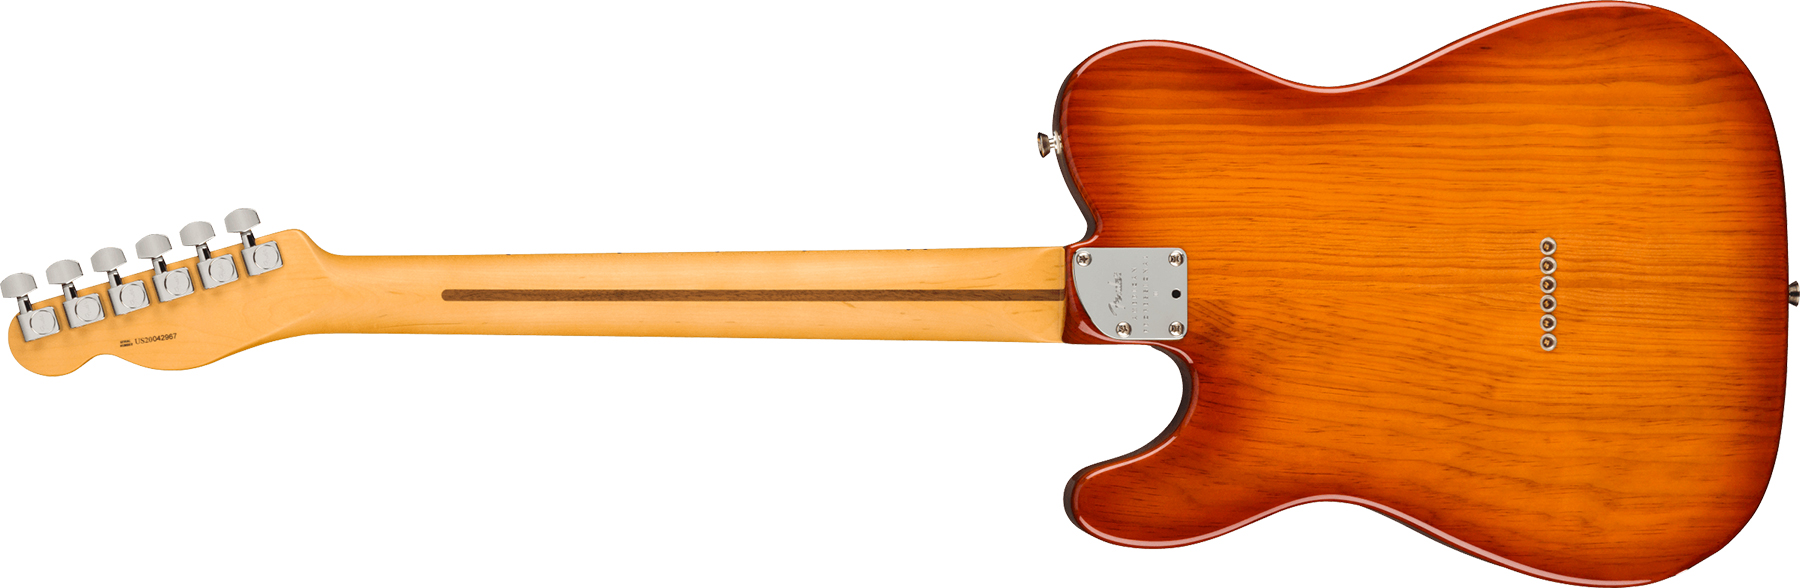 Fender Tele American Professional Ii Usa Mn - Sienna Sunburst - Guitare Électrique Forme Tel - Variation 1